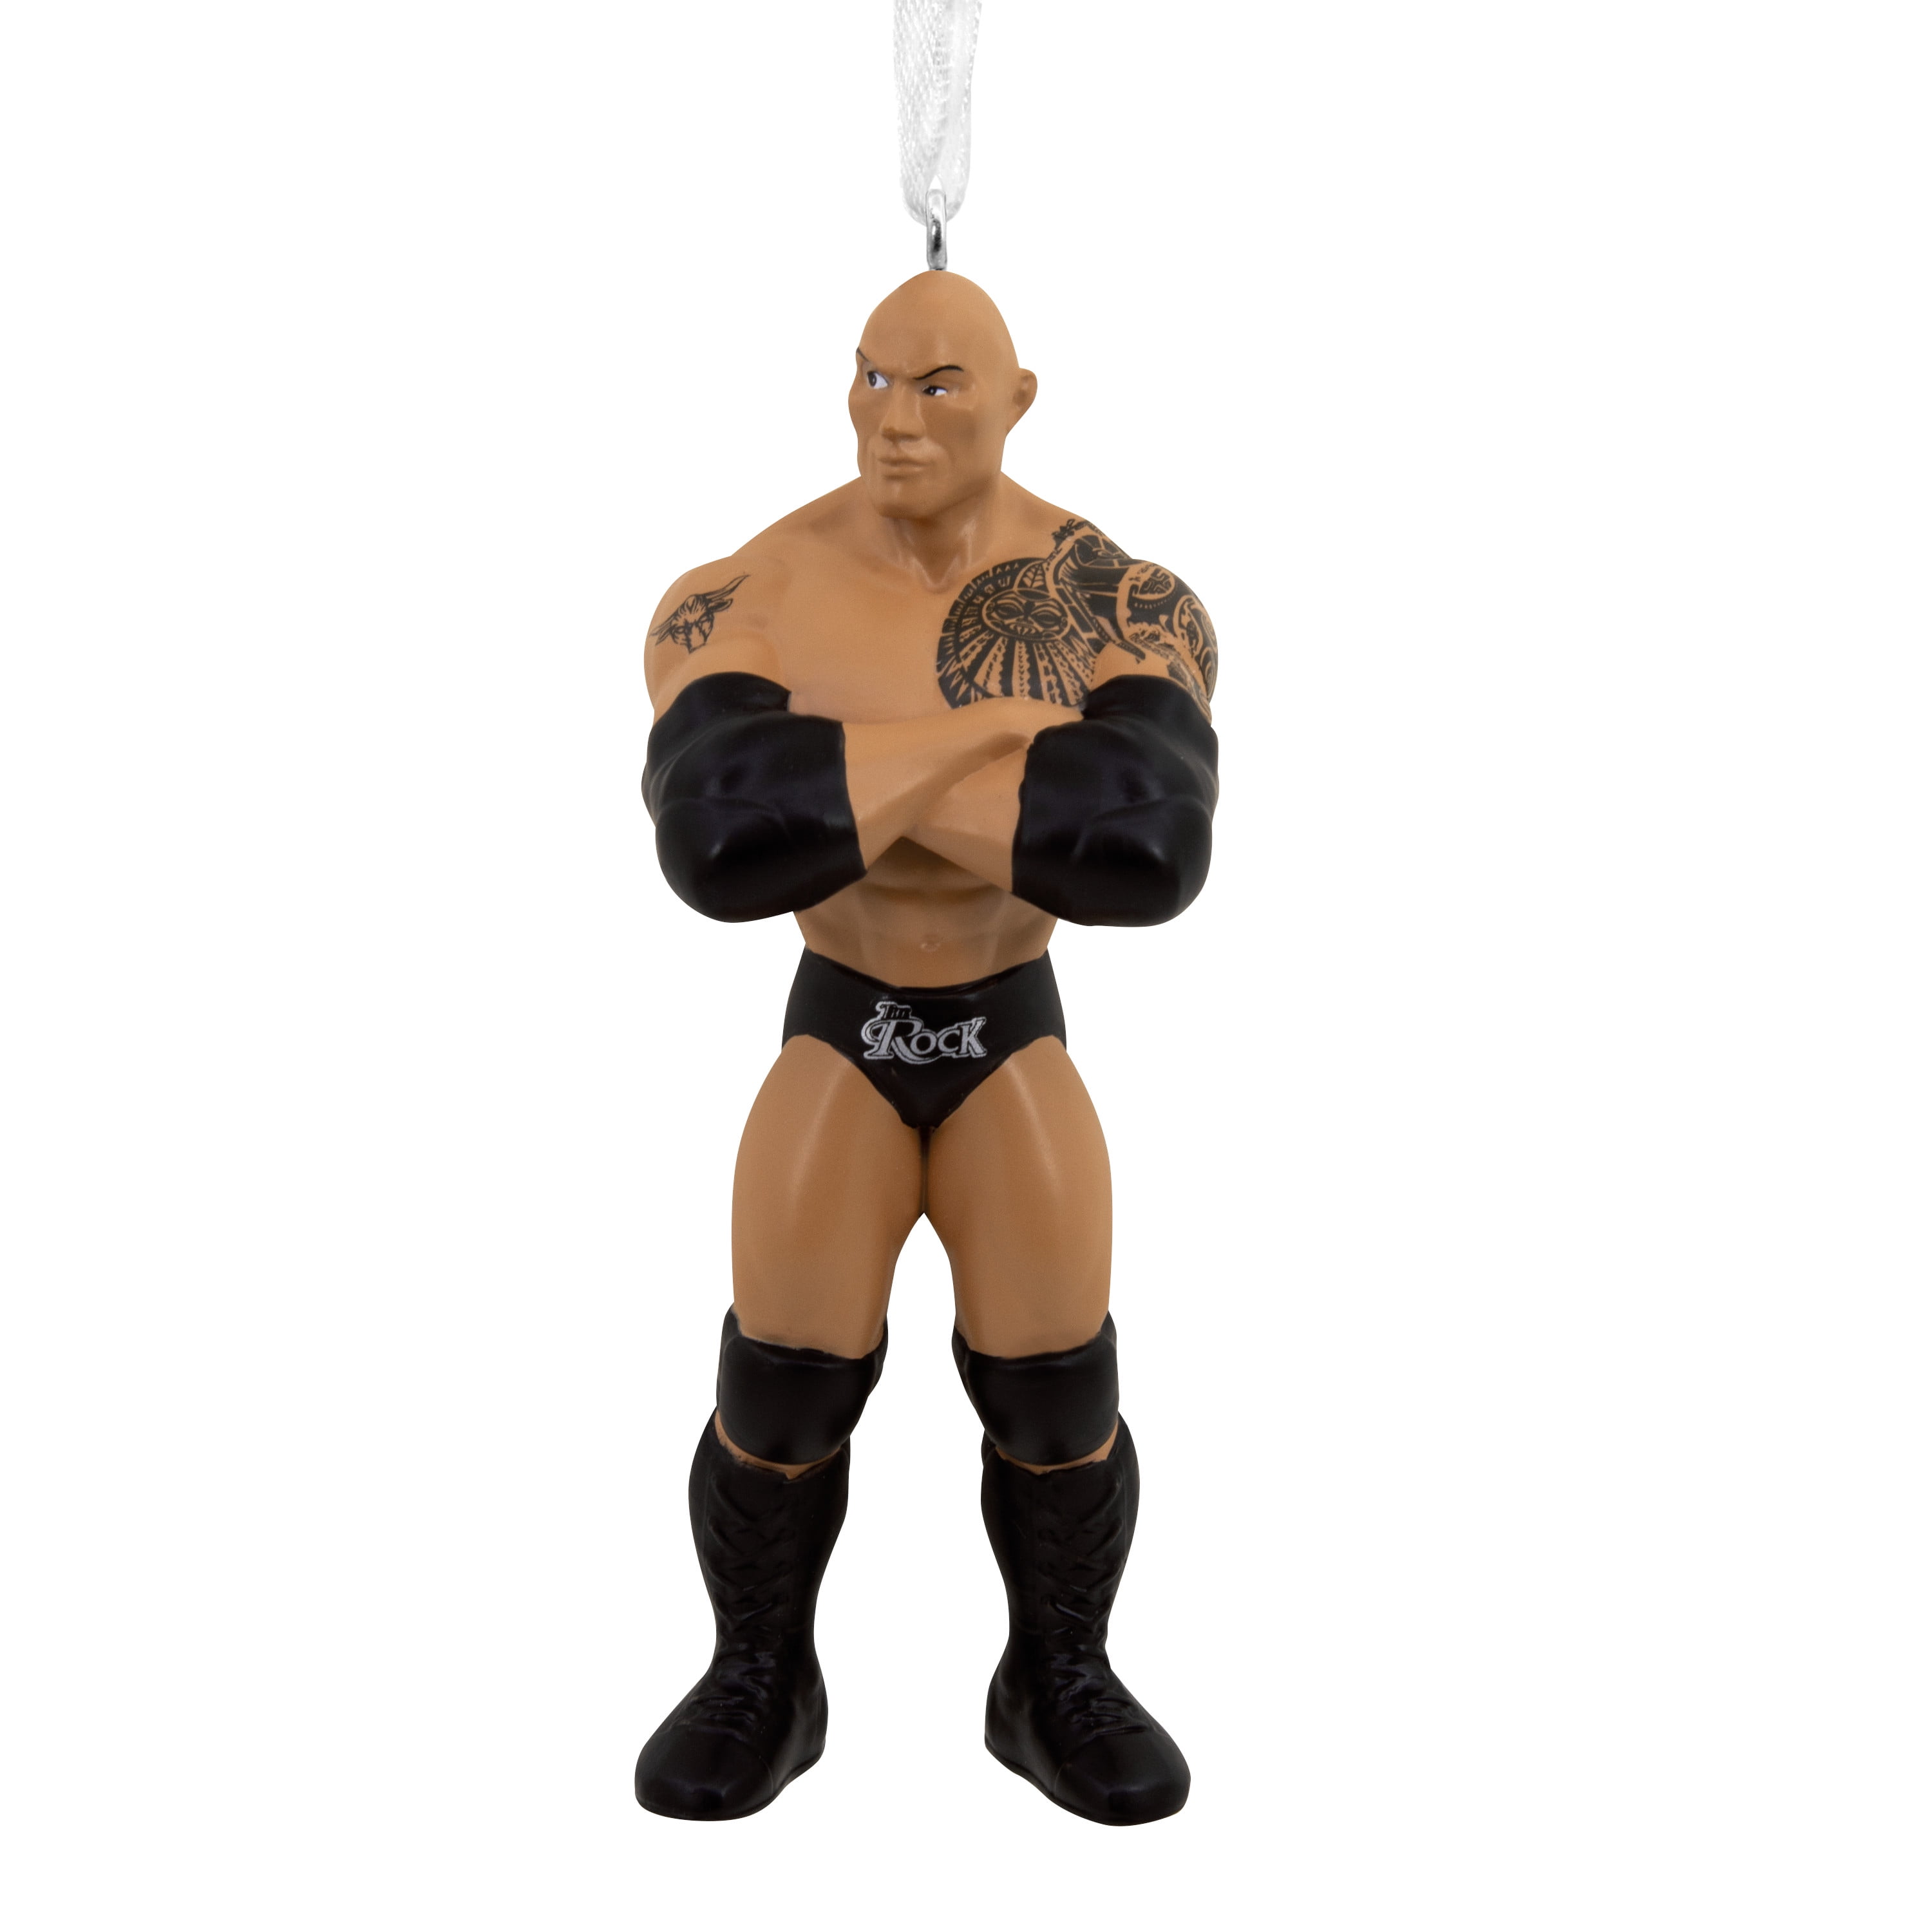 Hallmark Ornament (WWE The Rock)